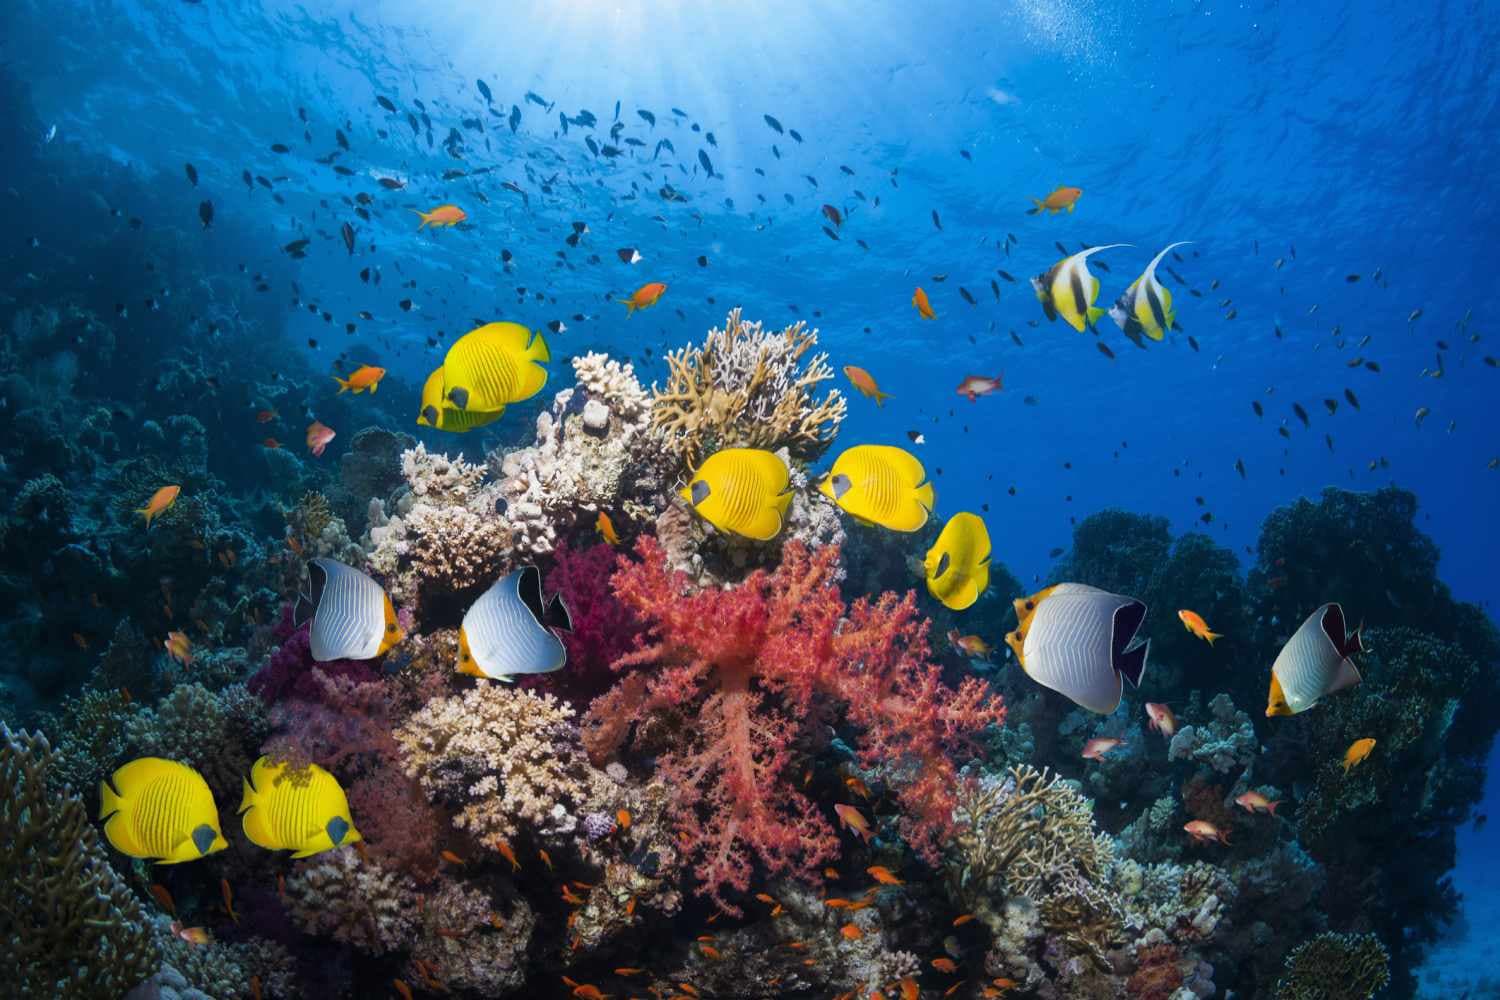 The Neritic Zone Ecosystem: A Crucial Marine Habitat